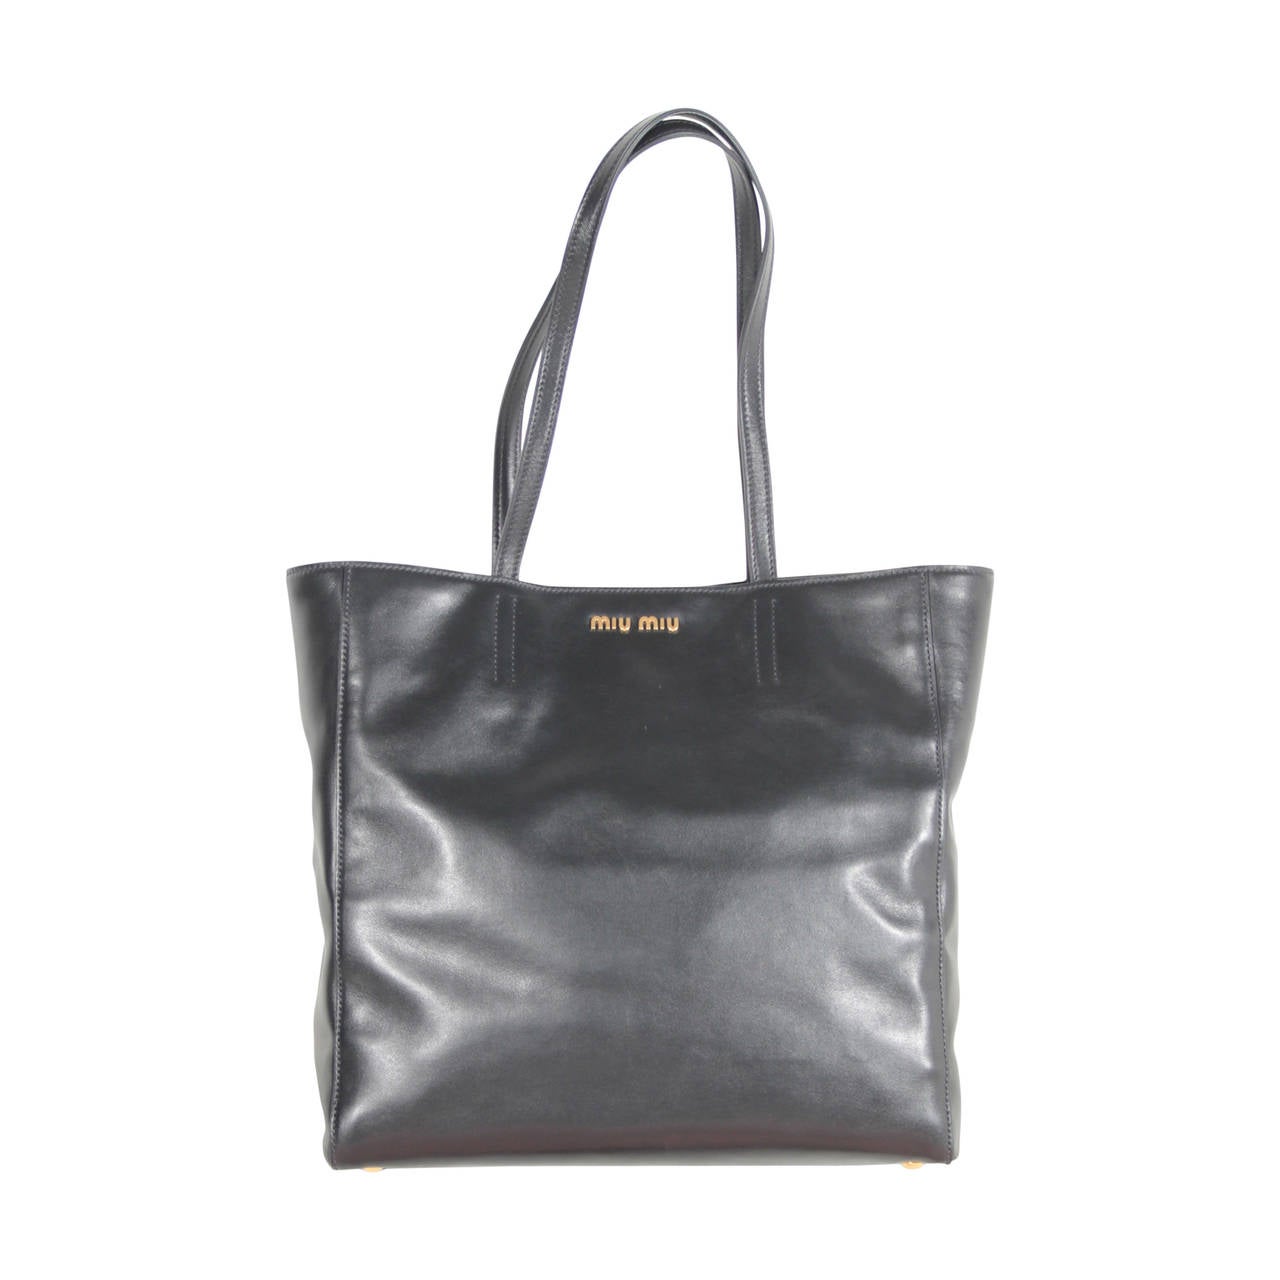 MIU MIU PRADA Black SOFT CALF Leather SHOPPING BAG Tote HANDBAG R1914S ...